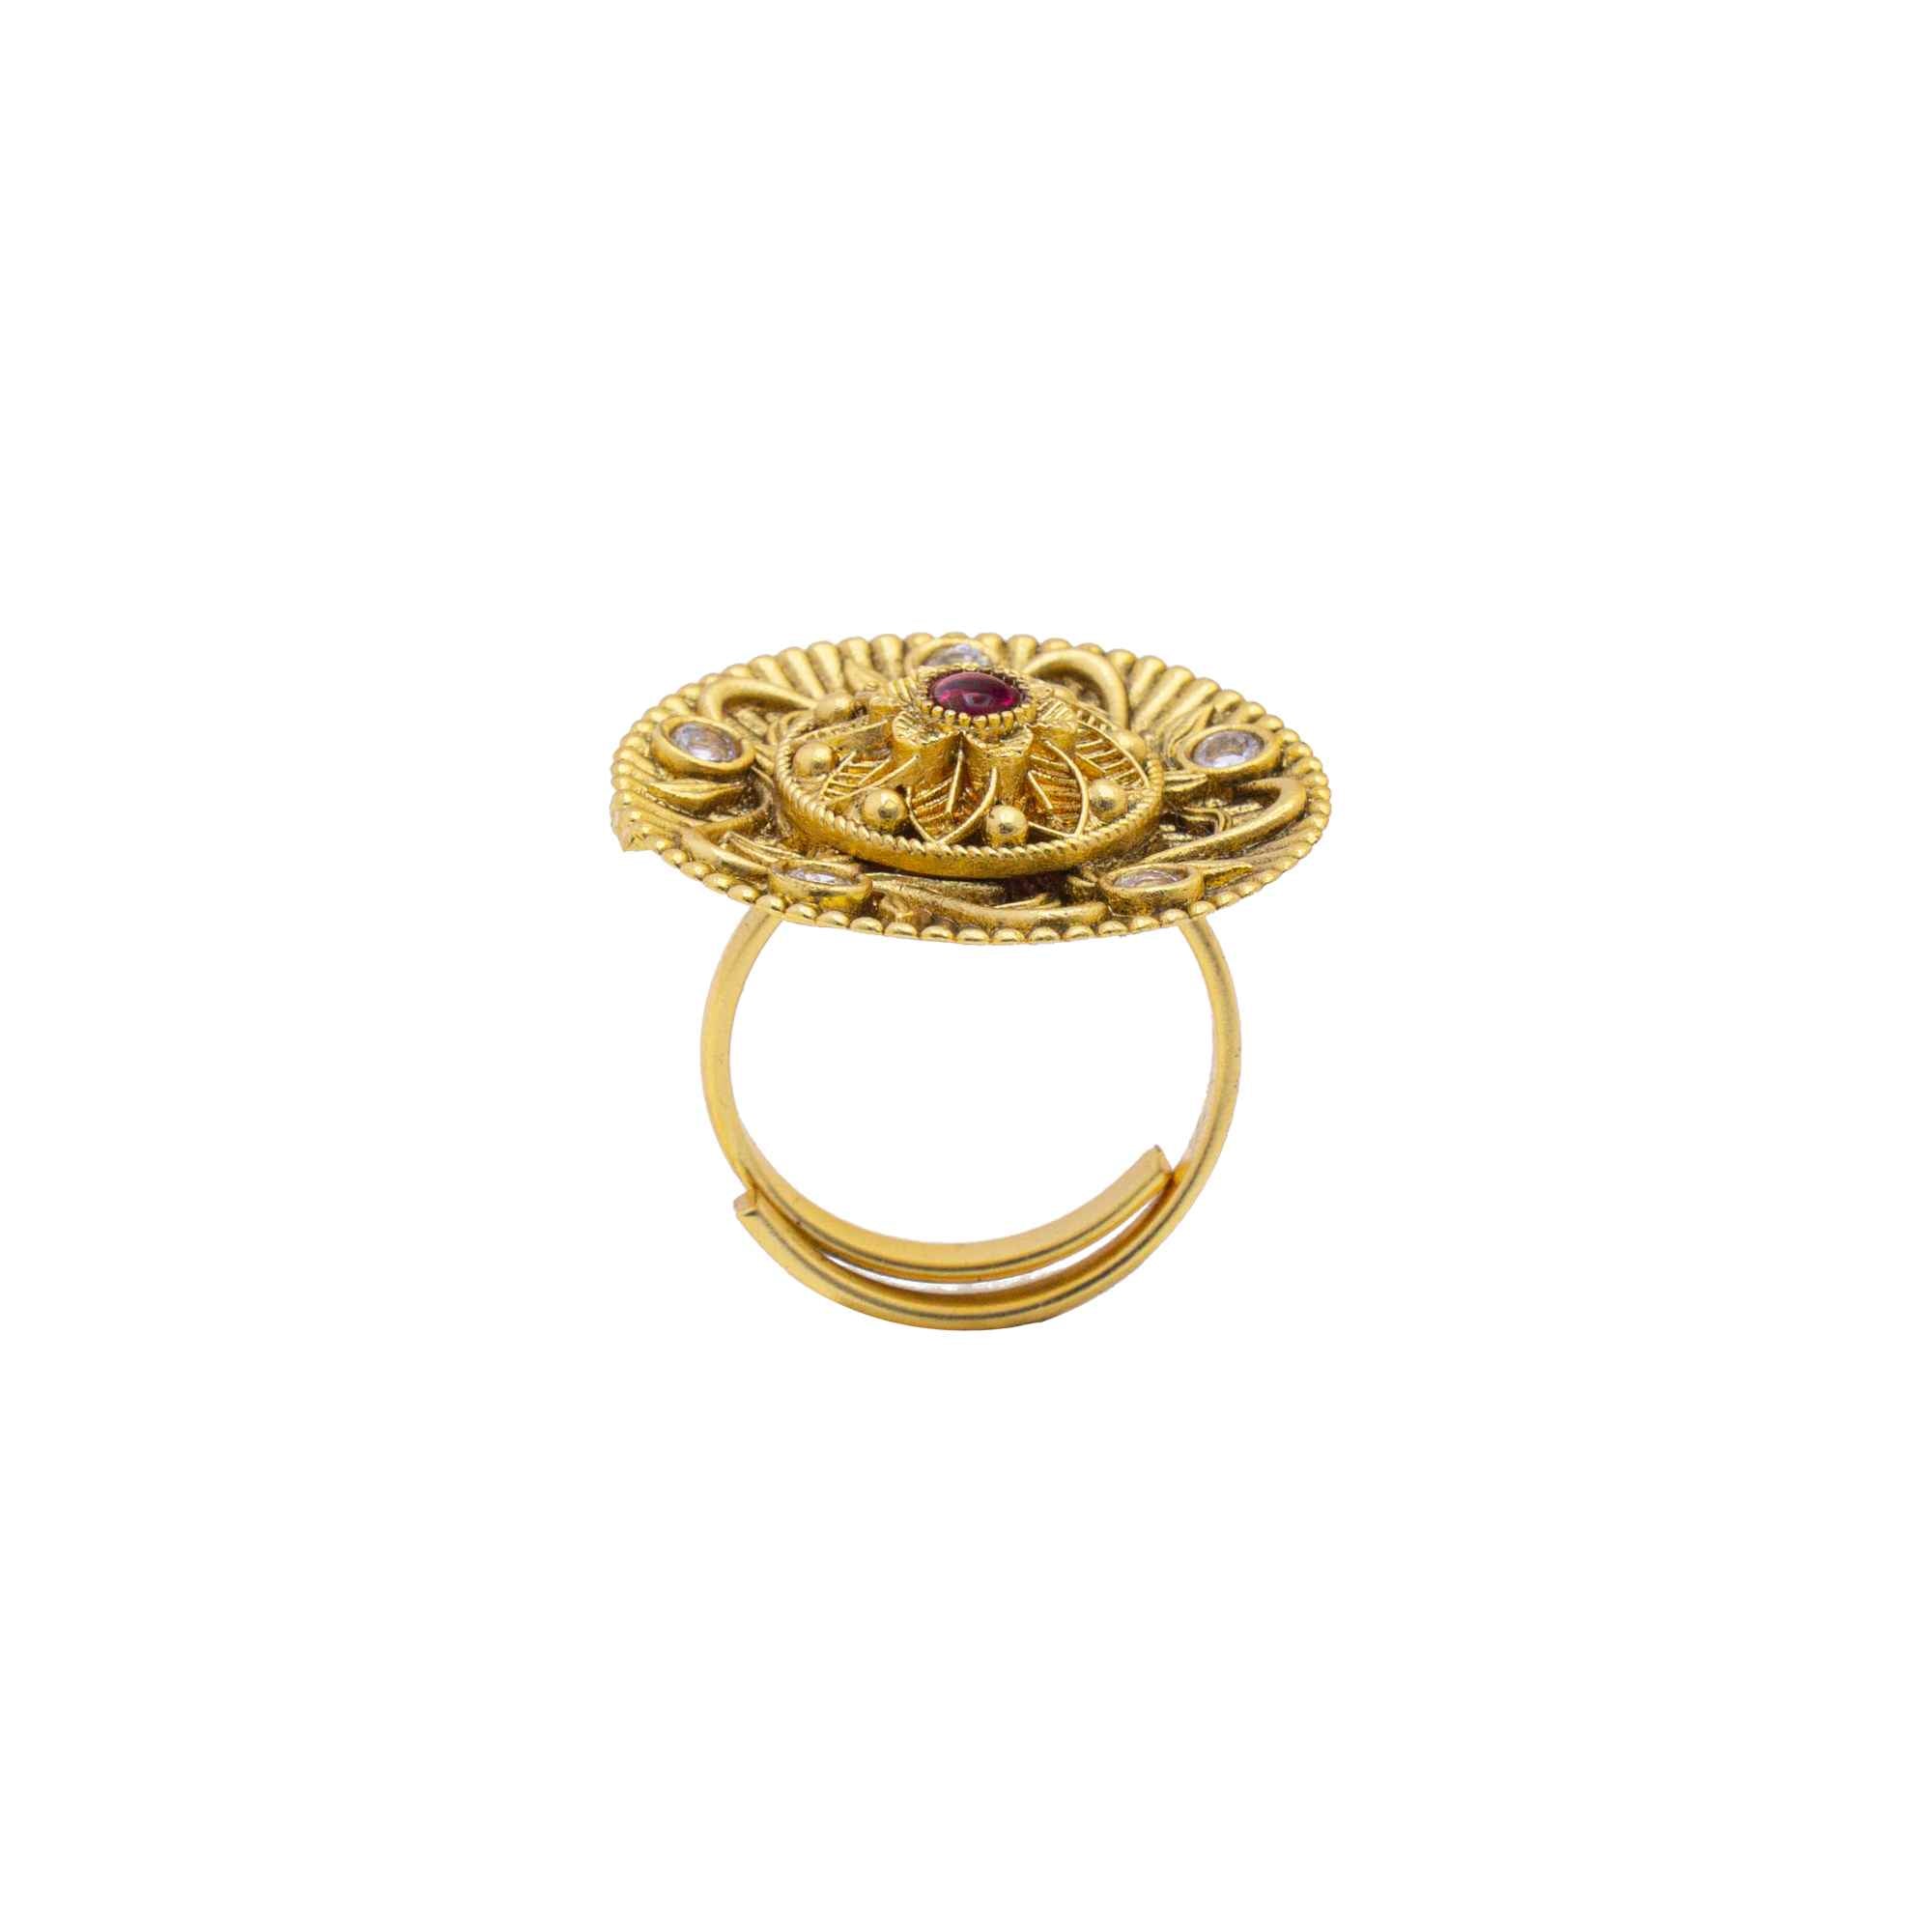 Buy Royal Gold Ring At Best Price | Karuri Jewellers